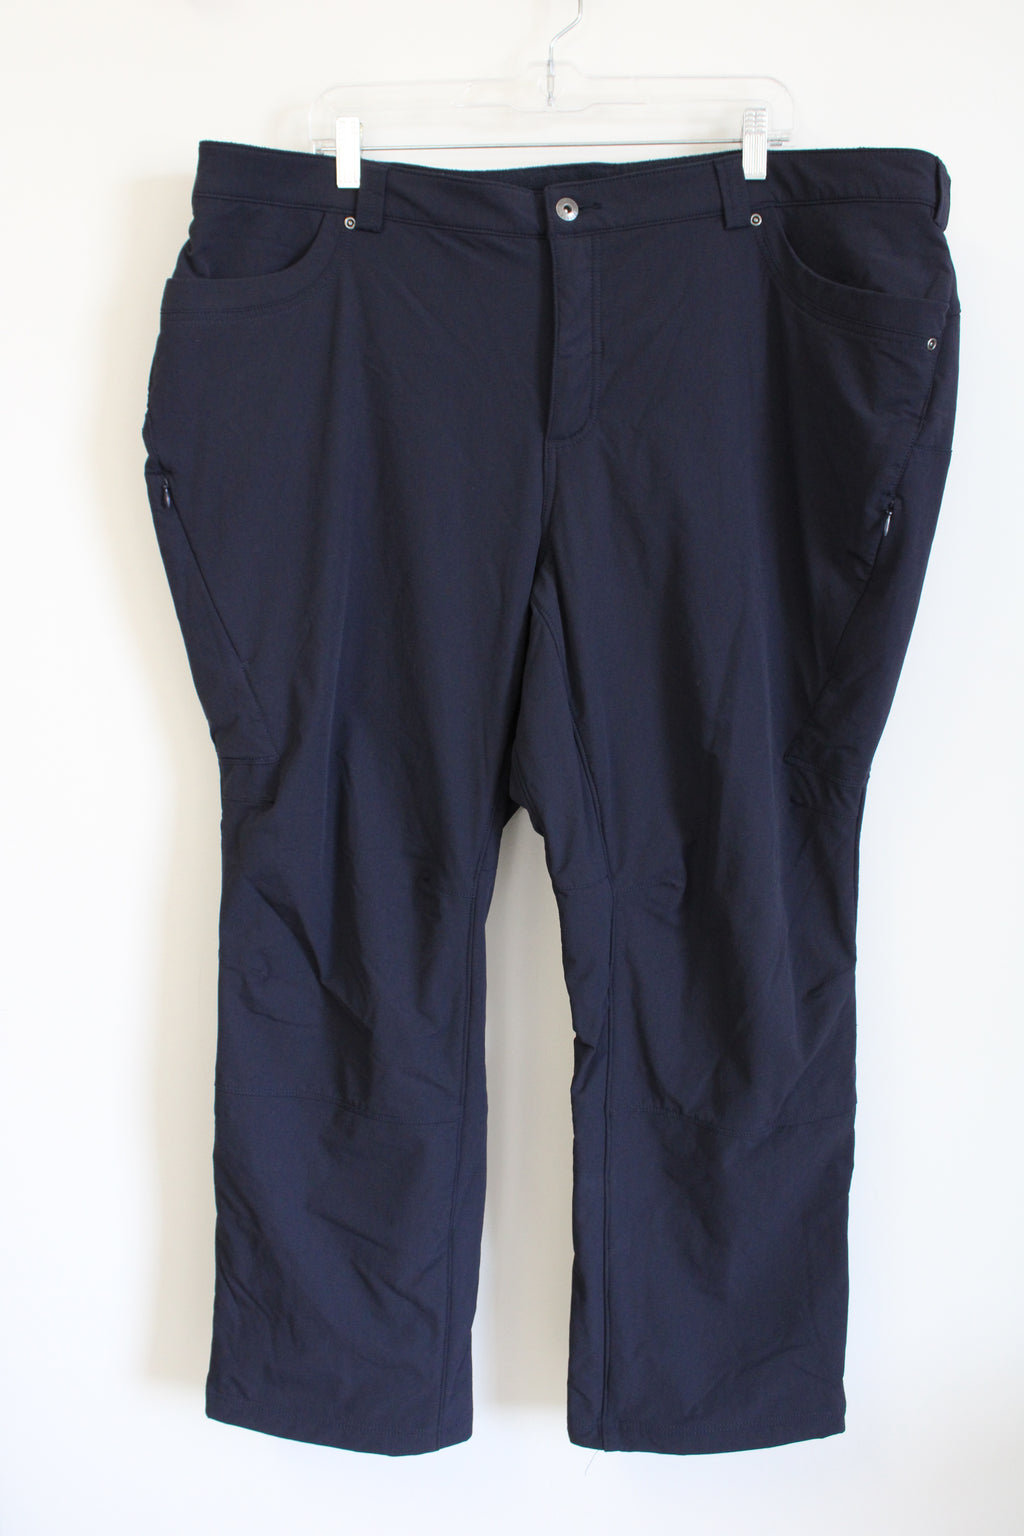 Duluth Trading Xo. Dark Navy Blue Fleece Lined Pant | 22W